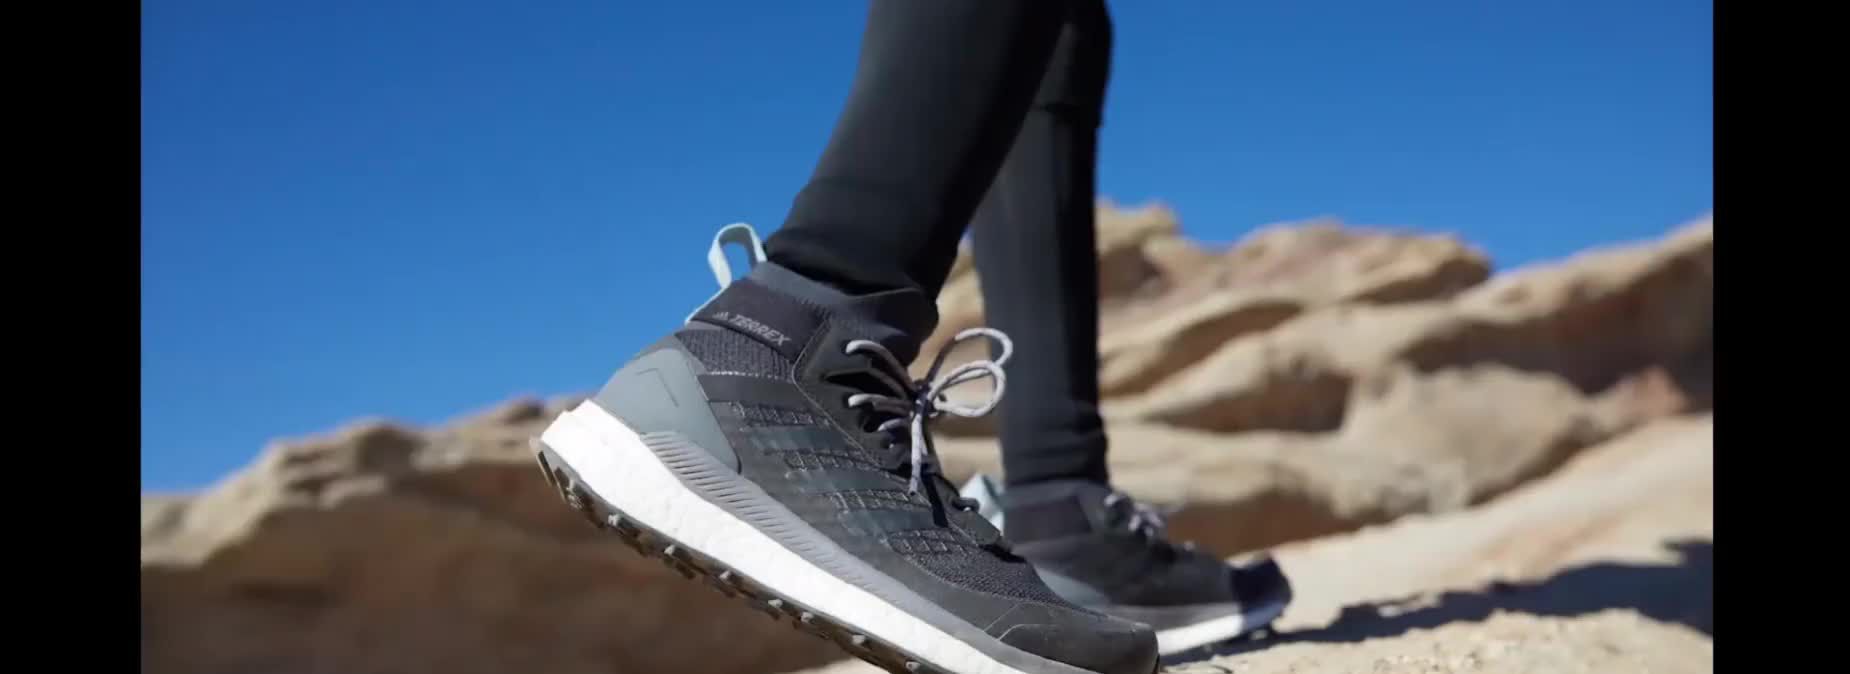 adidas terrex free hiker shoes